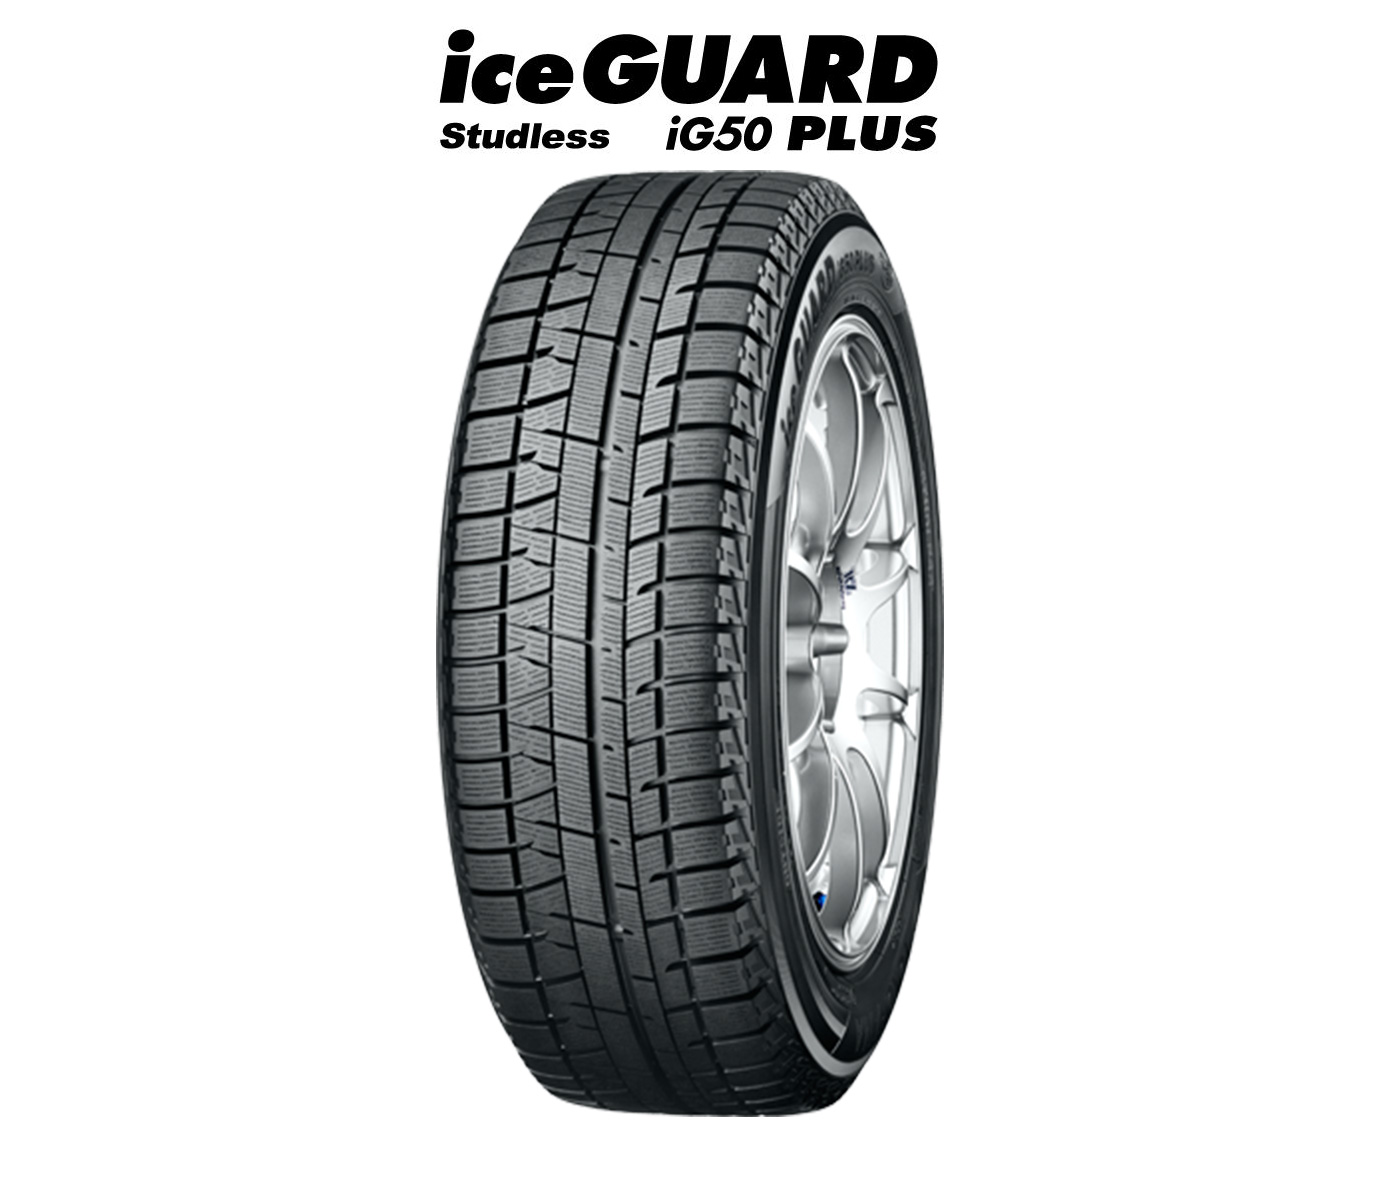 iceGUARD studless iG50 PLUS